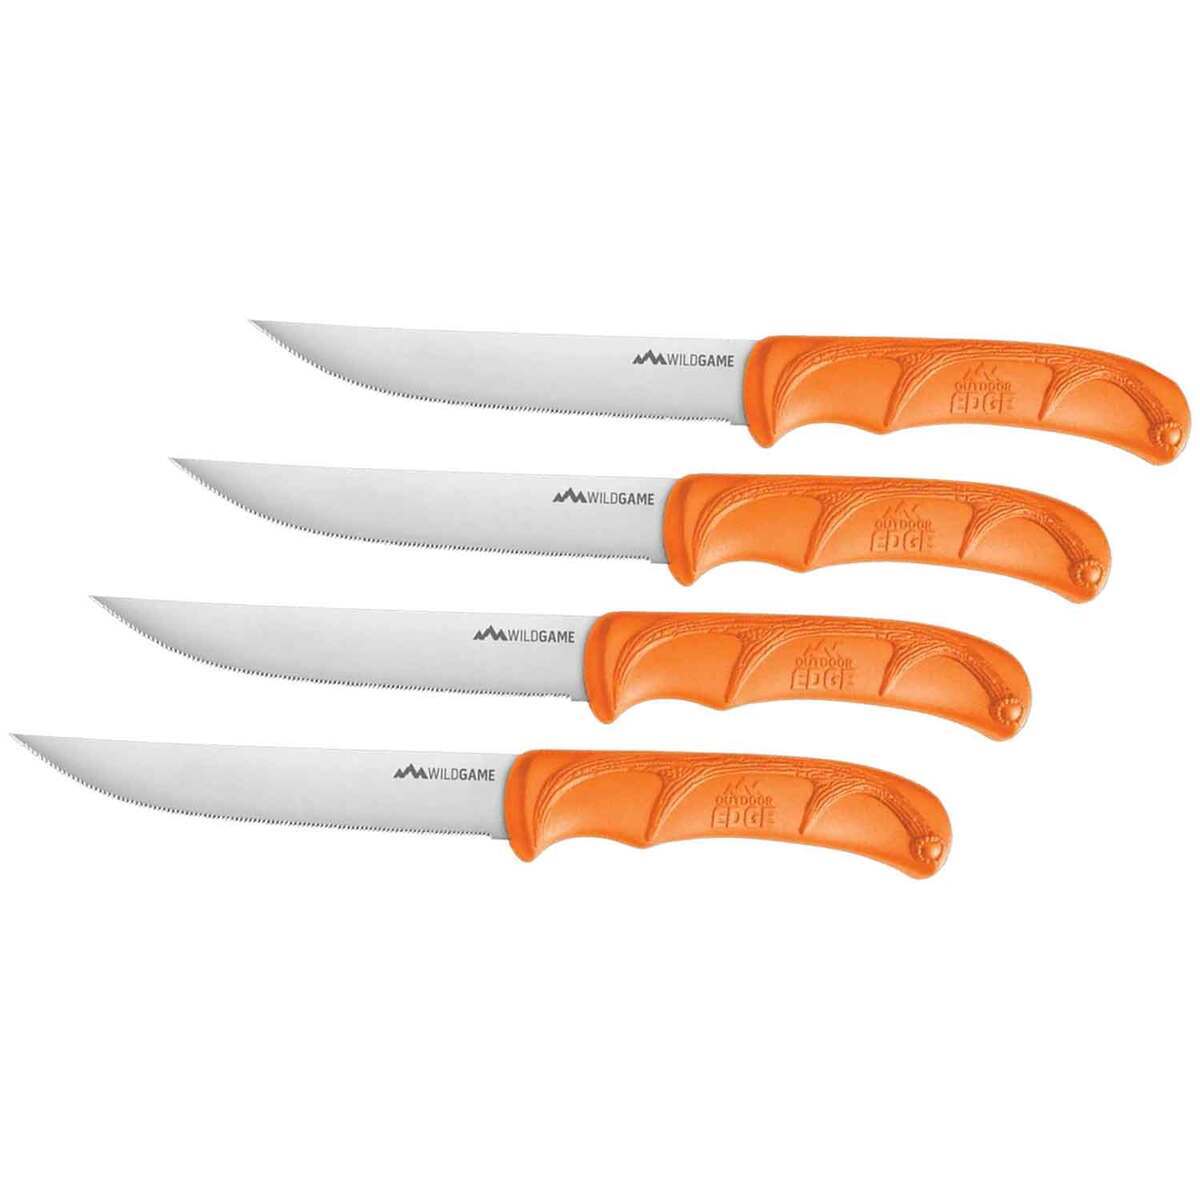 https://www.knives.com/medias/outdoor-edge-wildgame-5-inch-steak-knife-set-1641229-1.jpg?context=bWFzdGVyfGltYWdlc3w0NjUyNHxpbWFnZS9qcGVnfGgwOS9oM2QvMTA3ODg2NTI5NDEzNDIvMTY0MTIyOS0xX2Jhc2UtY29udmVyc2lvbkZvcm1hdF8xMjAwLWNvbnZlcnNpb25Gb3JtYXR8MjI4MjMzZGI3OGMwZmNhMjk1N2MyZDE4NjE5MDhlZjBkZjNlMTUyNjEwYzAwZTBhZTg2OTAzOTQ4MDYwM2ZjMQ